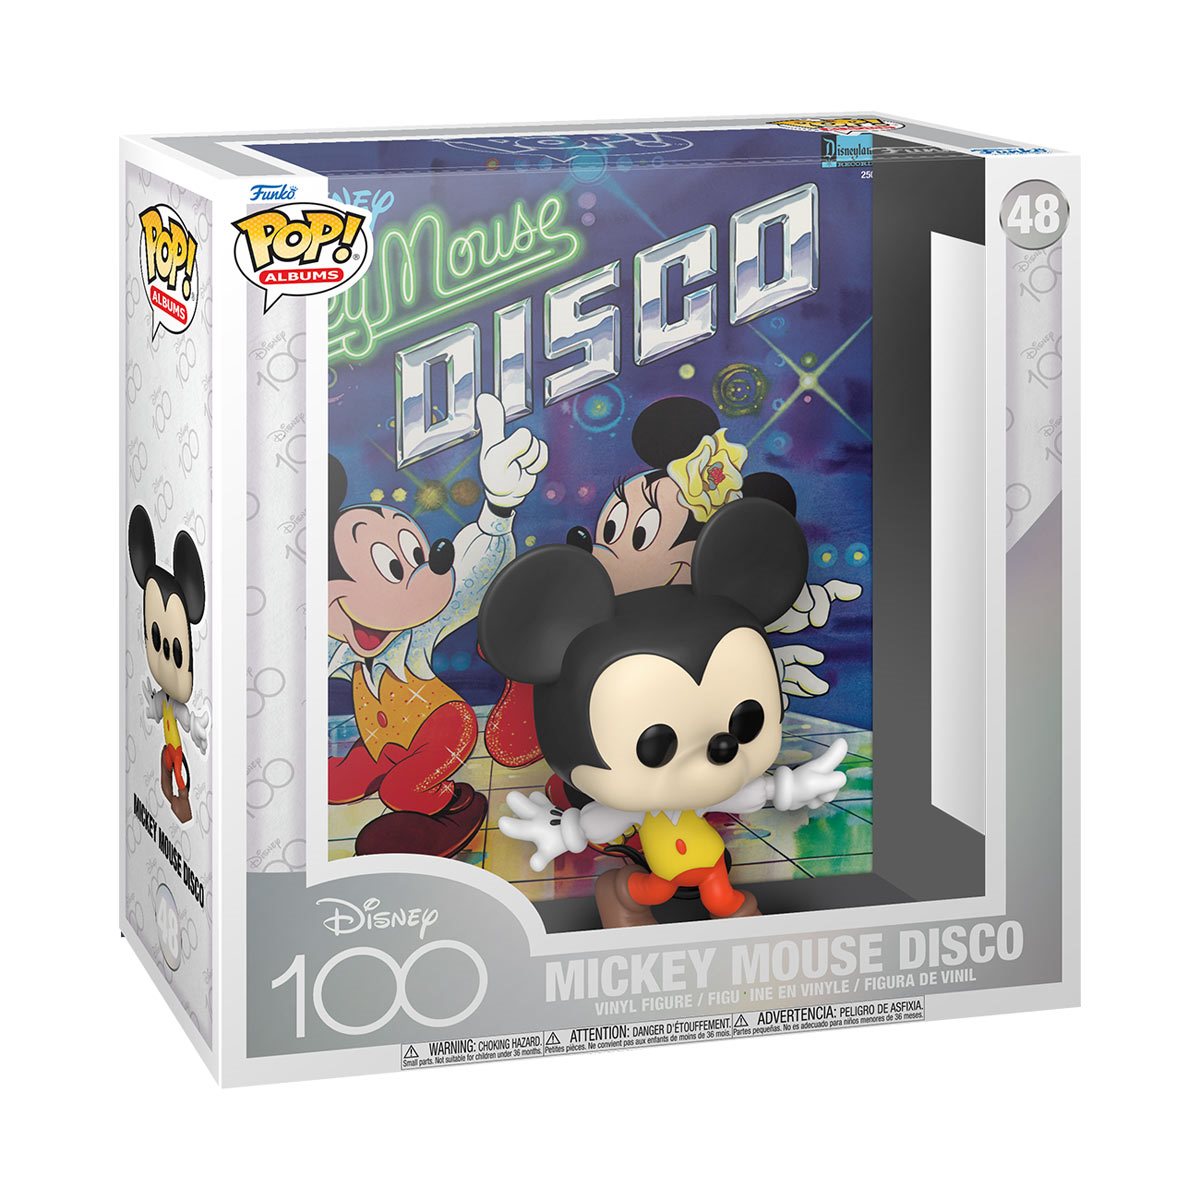 Disney 100 Mickey Mouse Disco Funko Pop! Album Figure #48 with Case